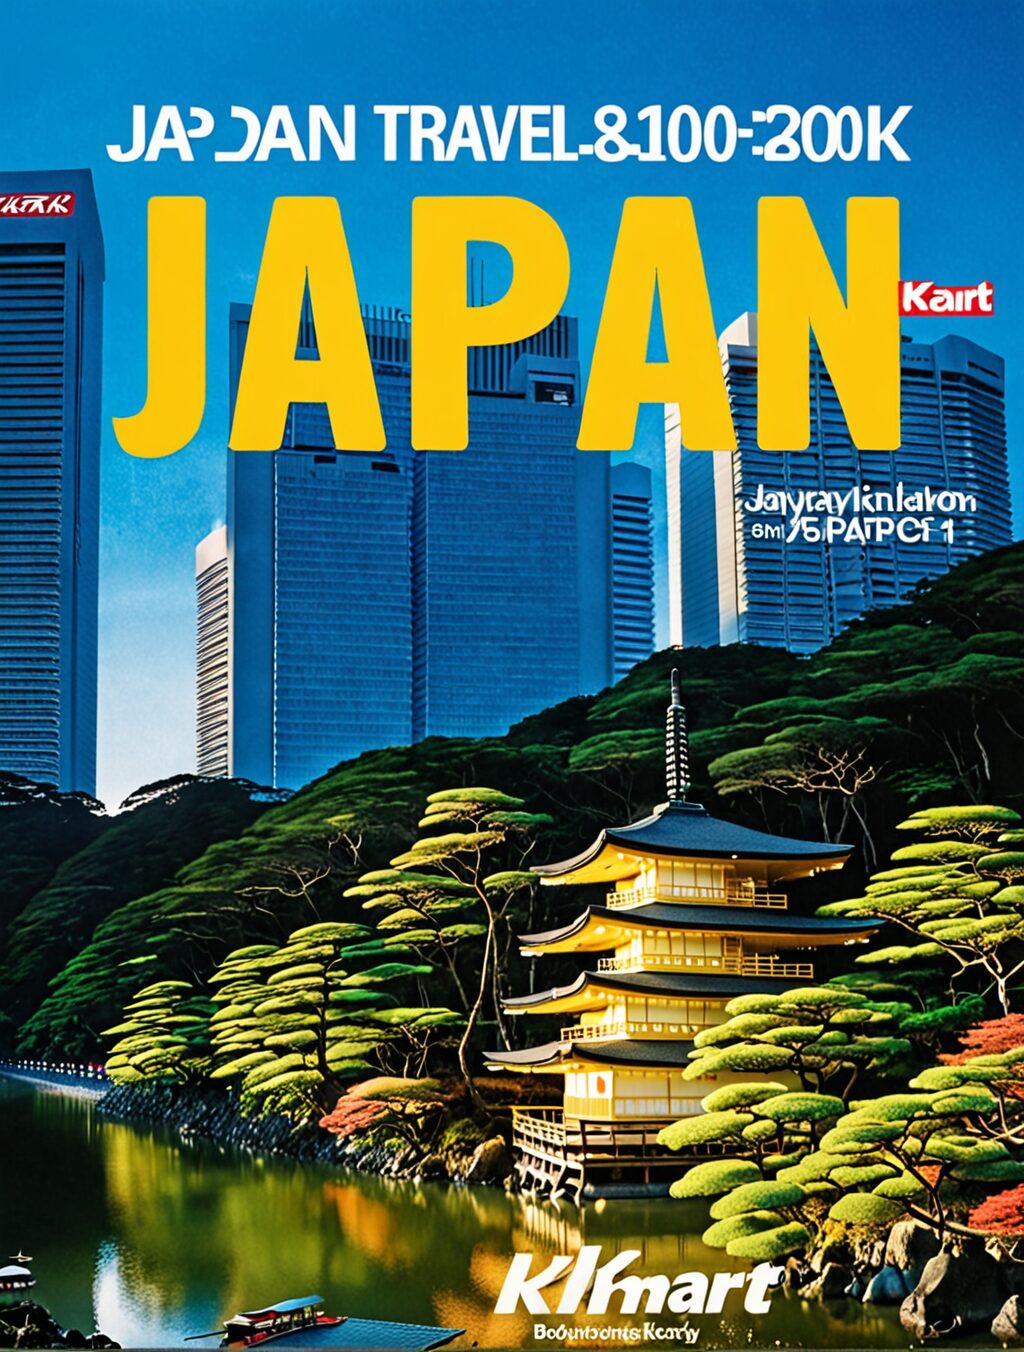 japan travel book kmart